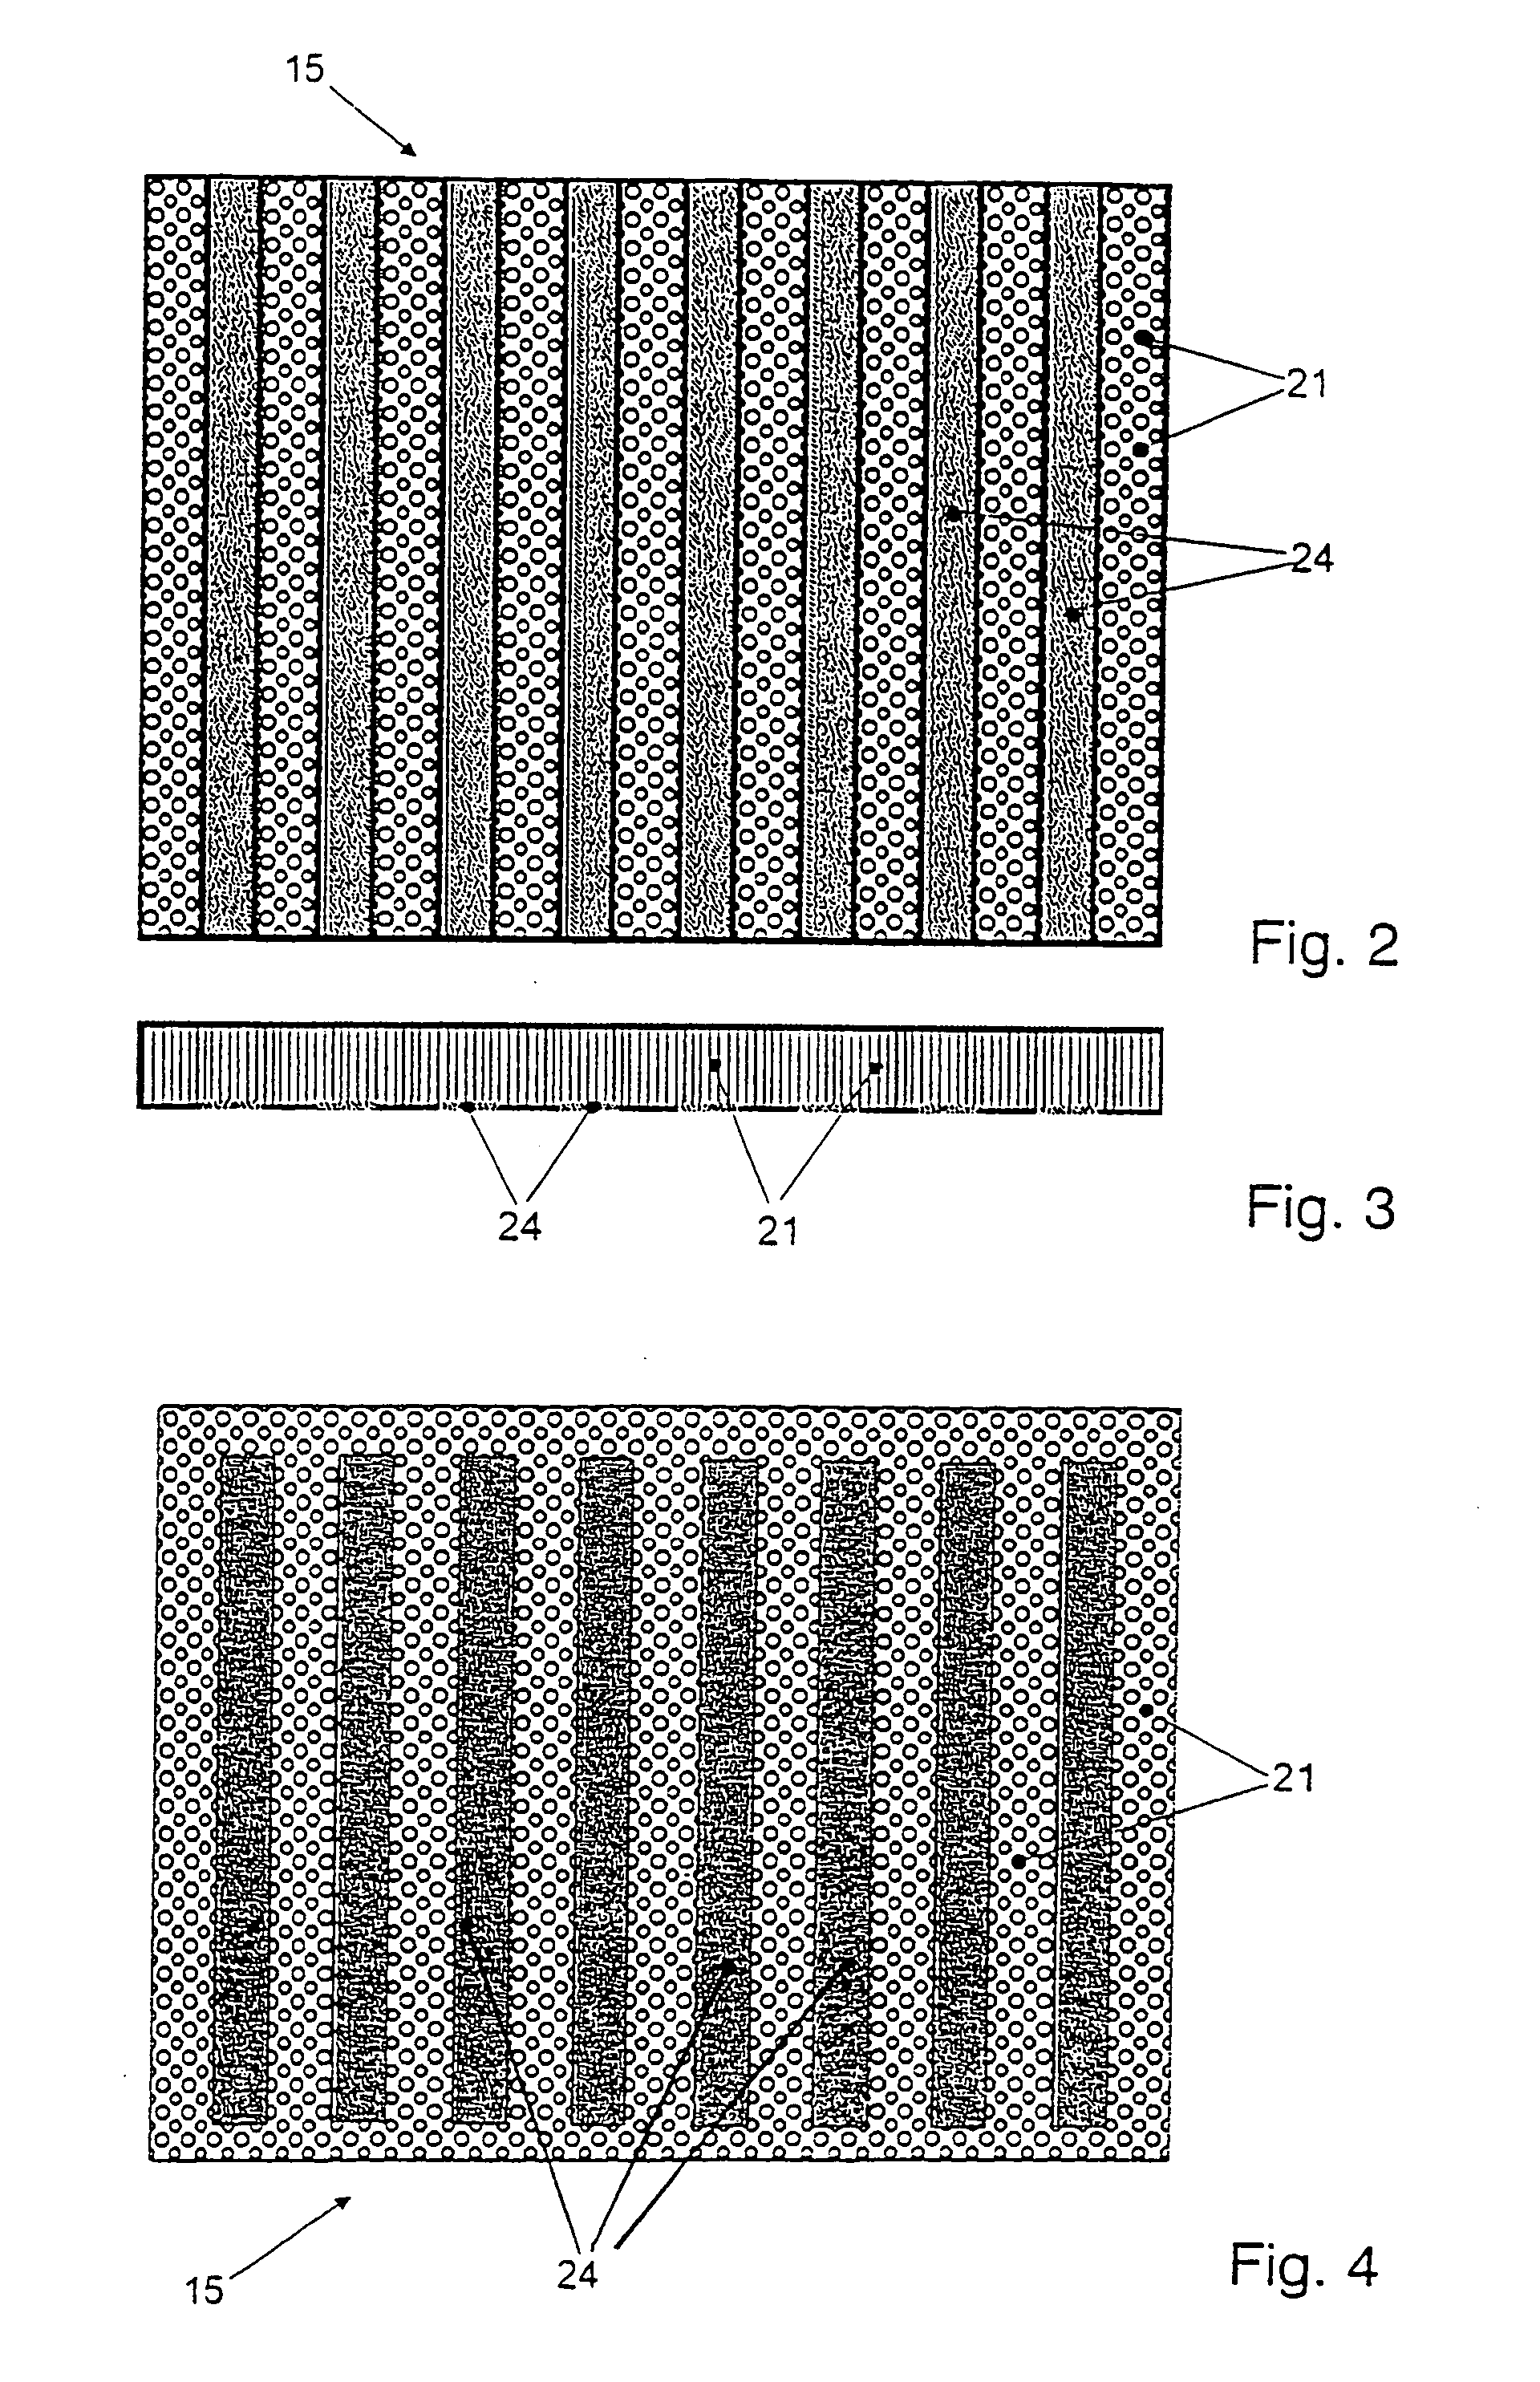 Infrared radiator embodied as a surface radiator